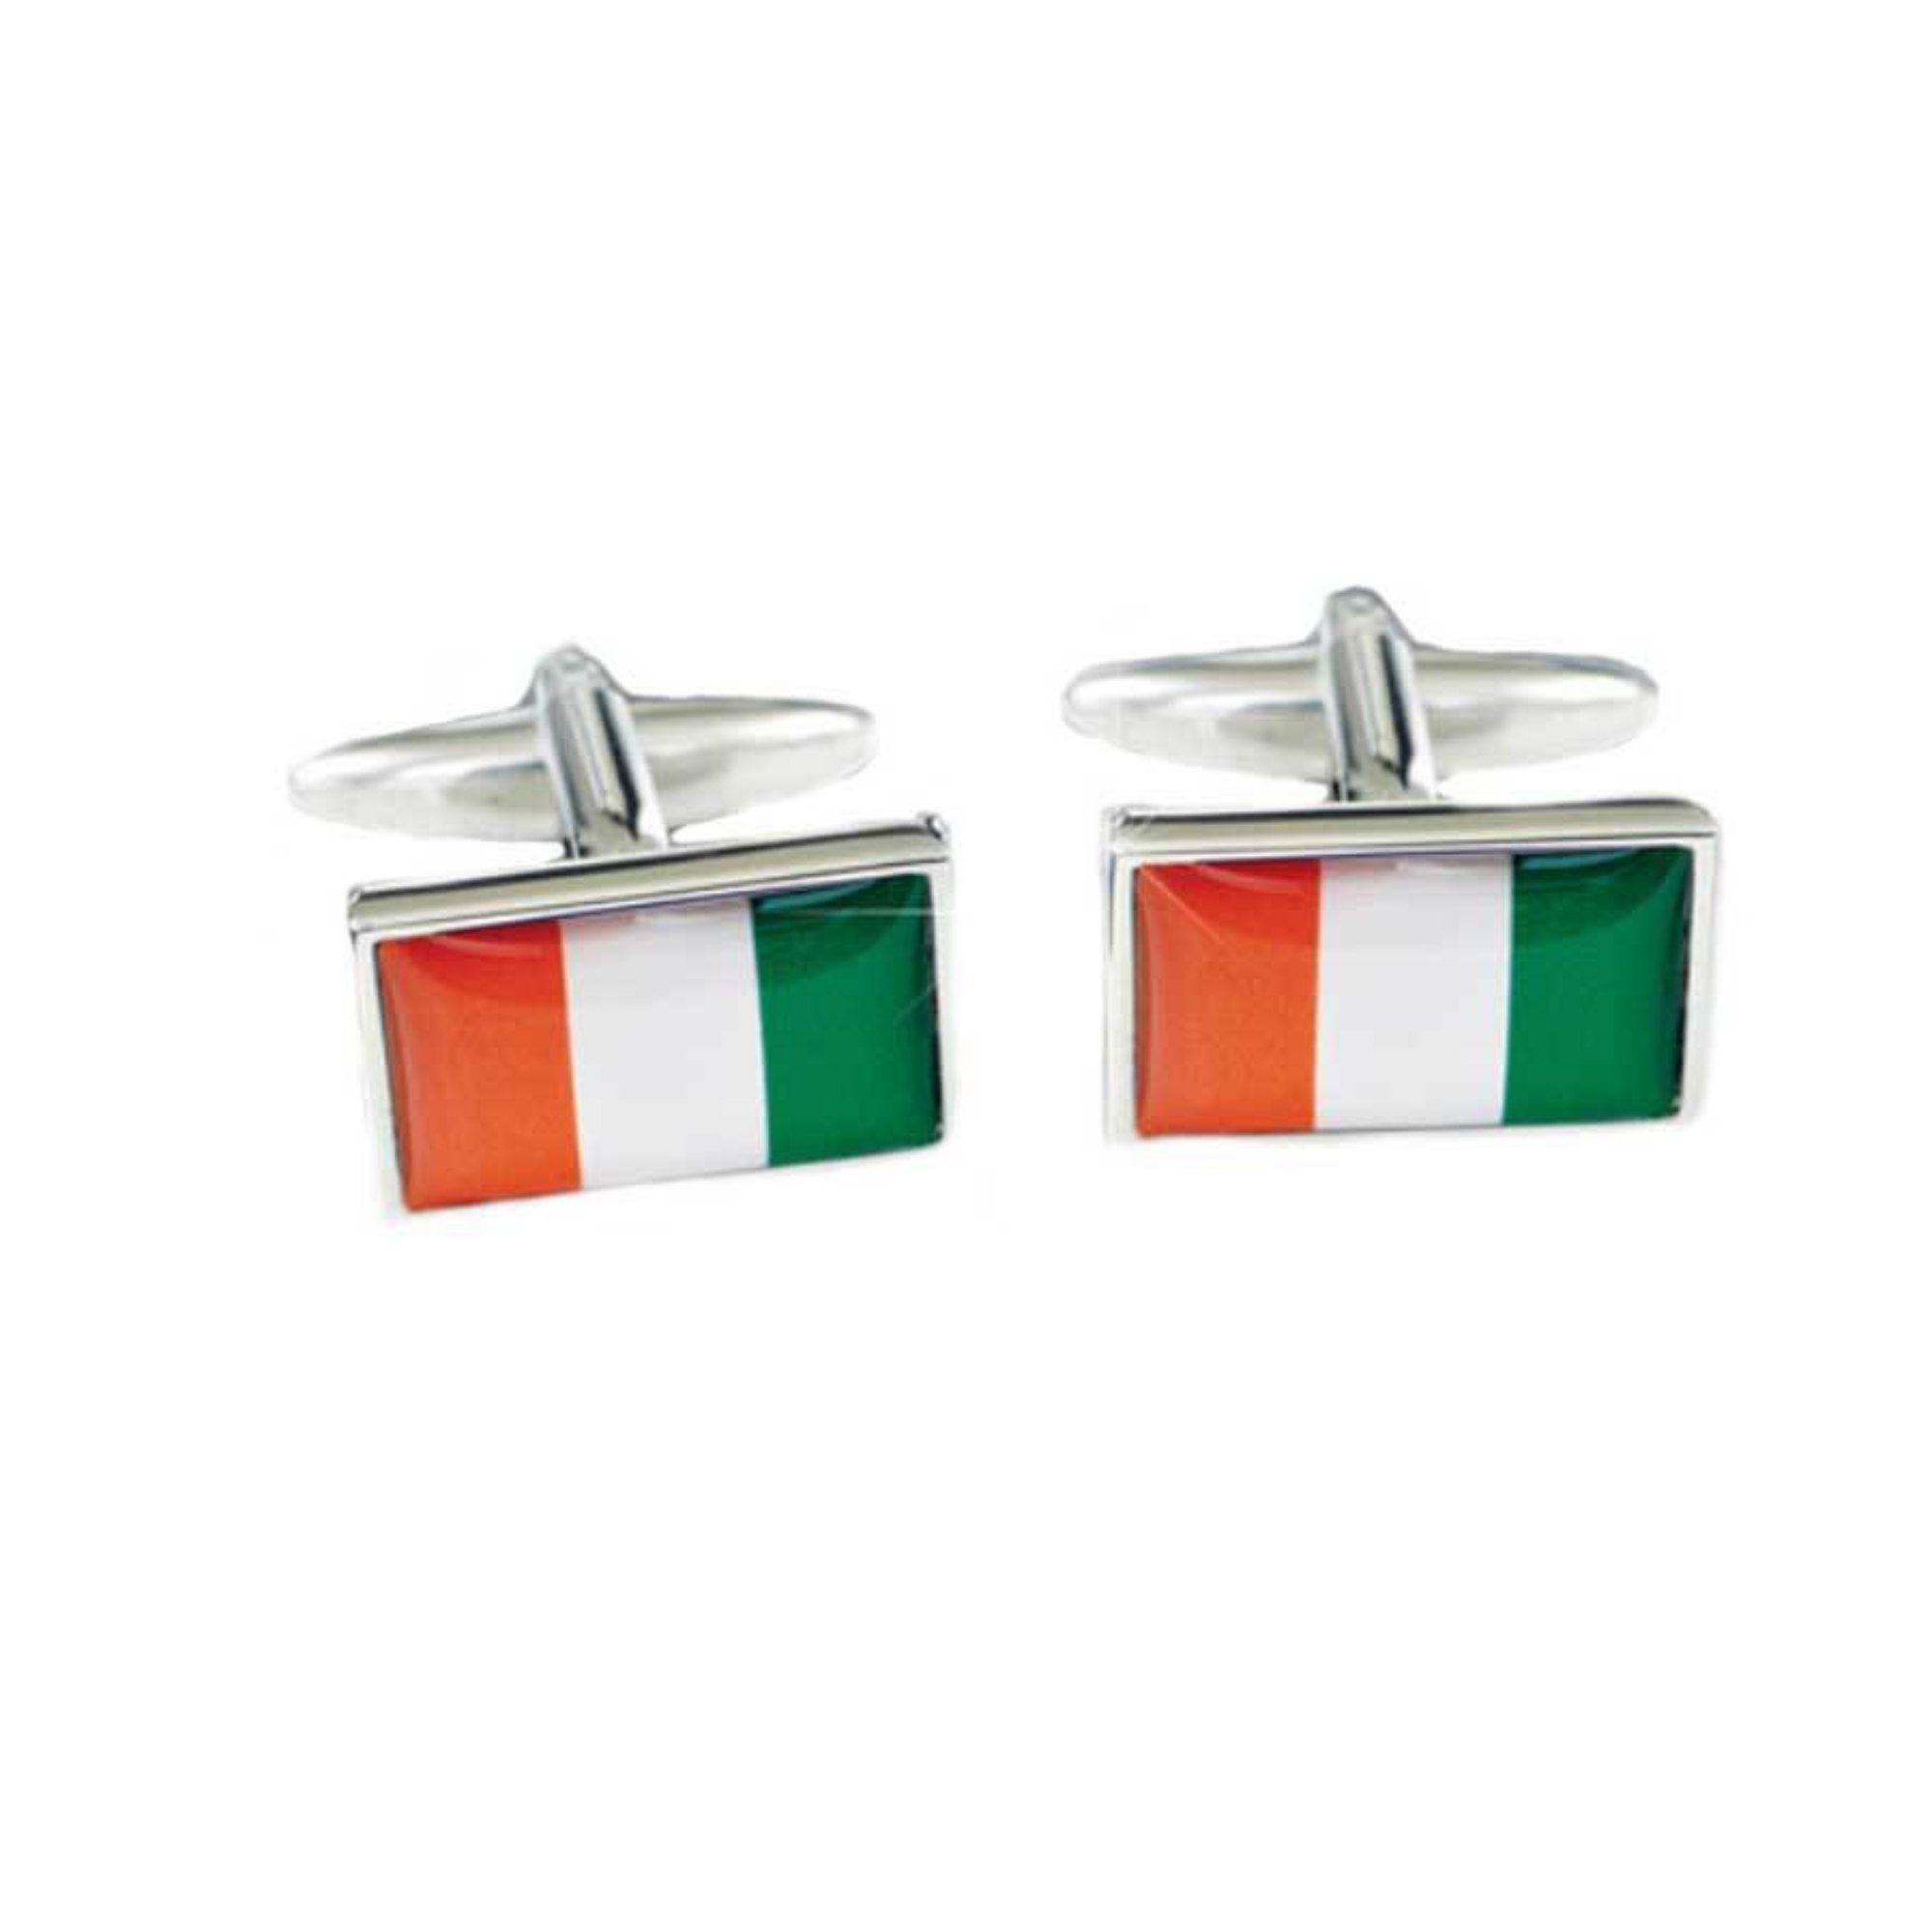 Irish Flag Cufflinks - Flag of Ireland